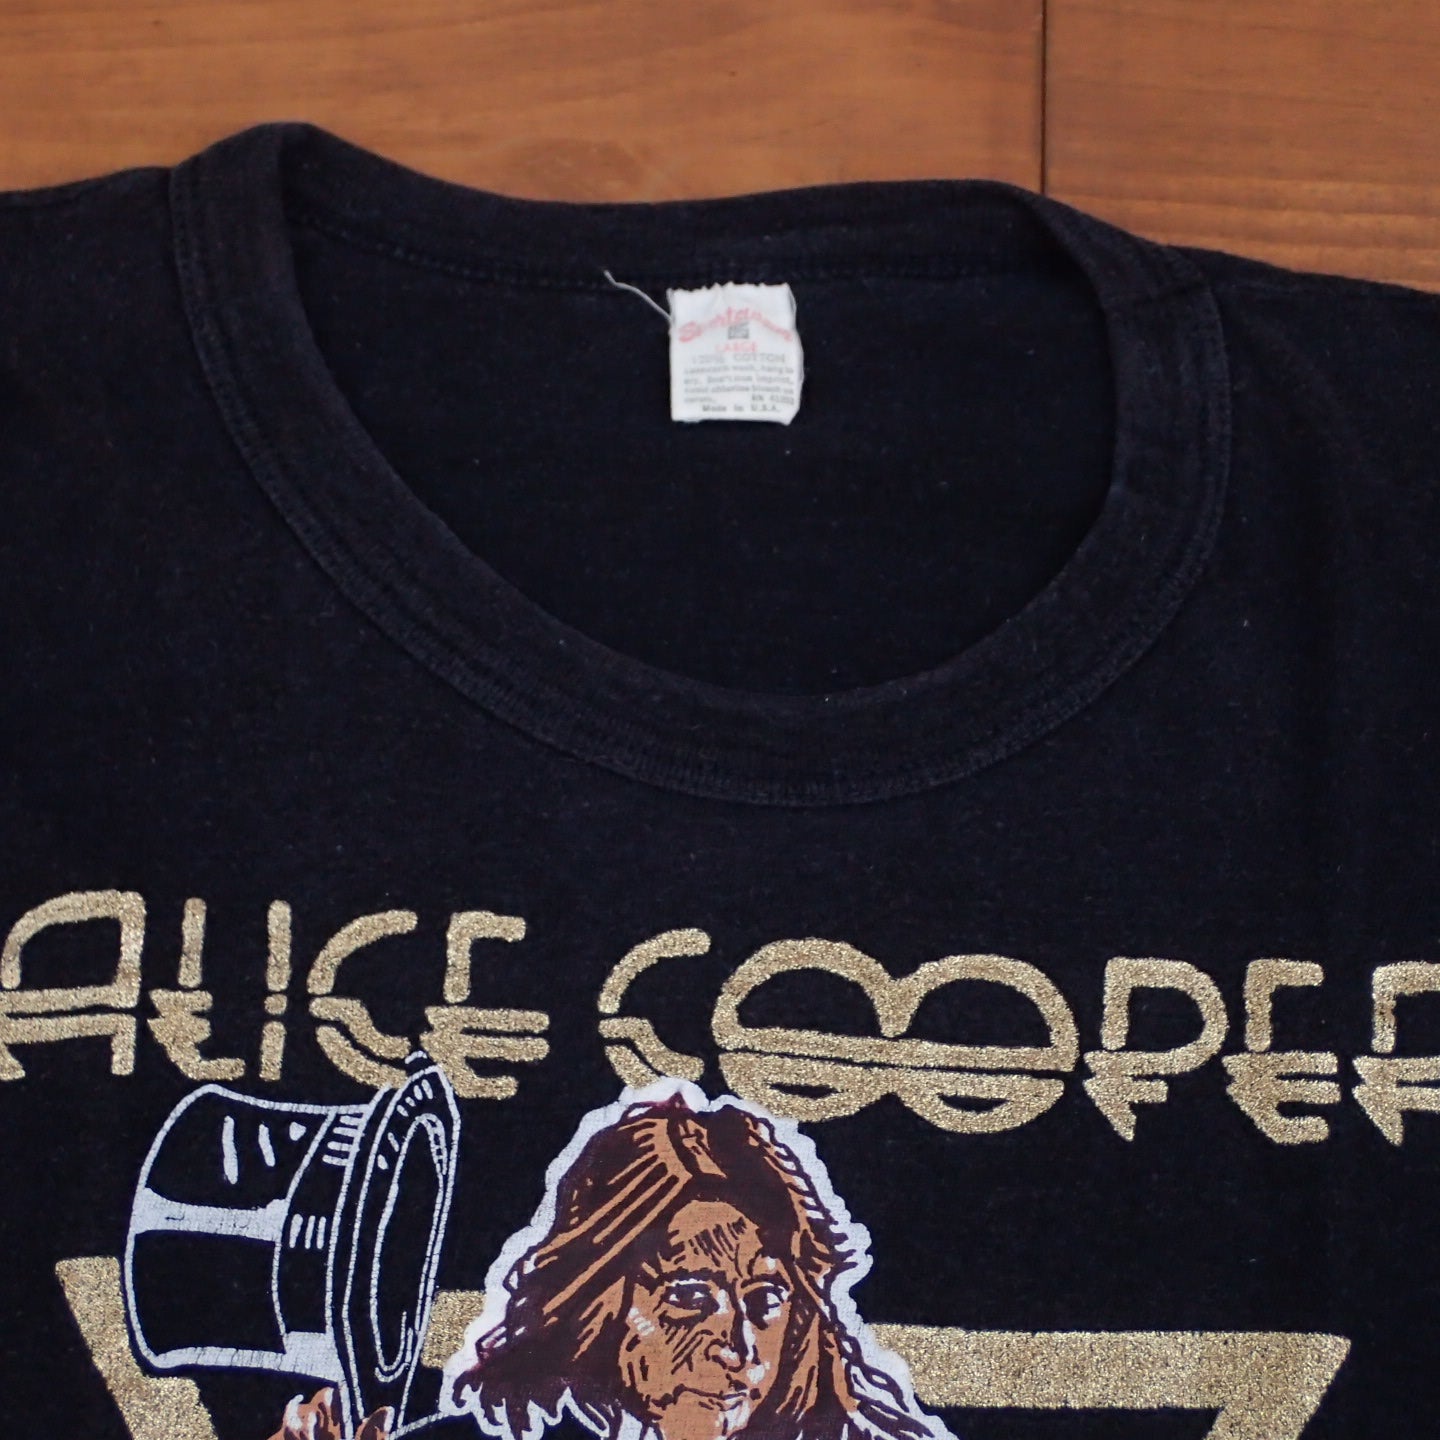 70s Alice Cooper T-shirt "Welcome To My Nightmare Tee"